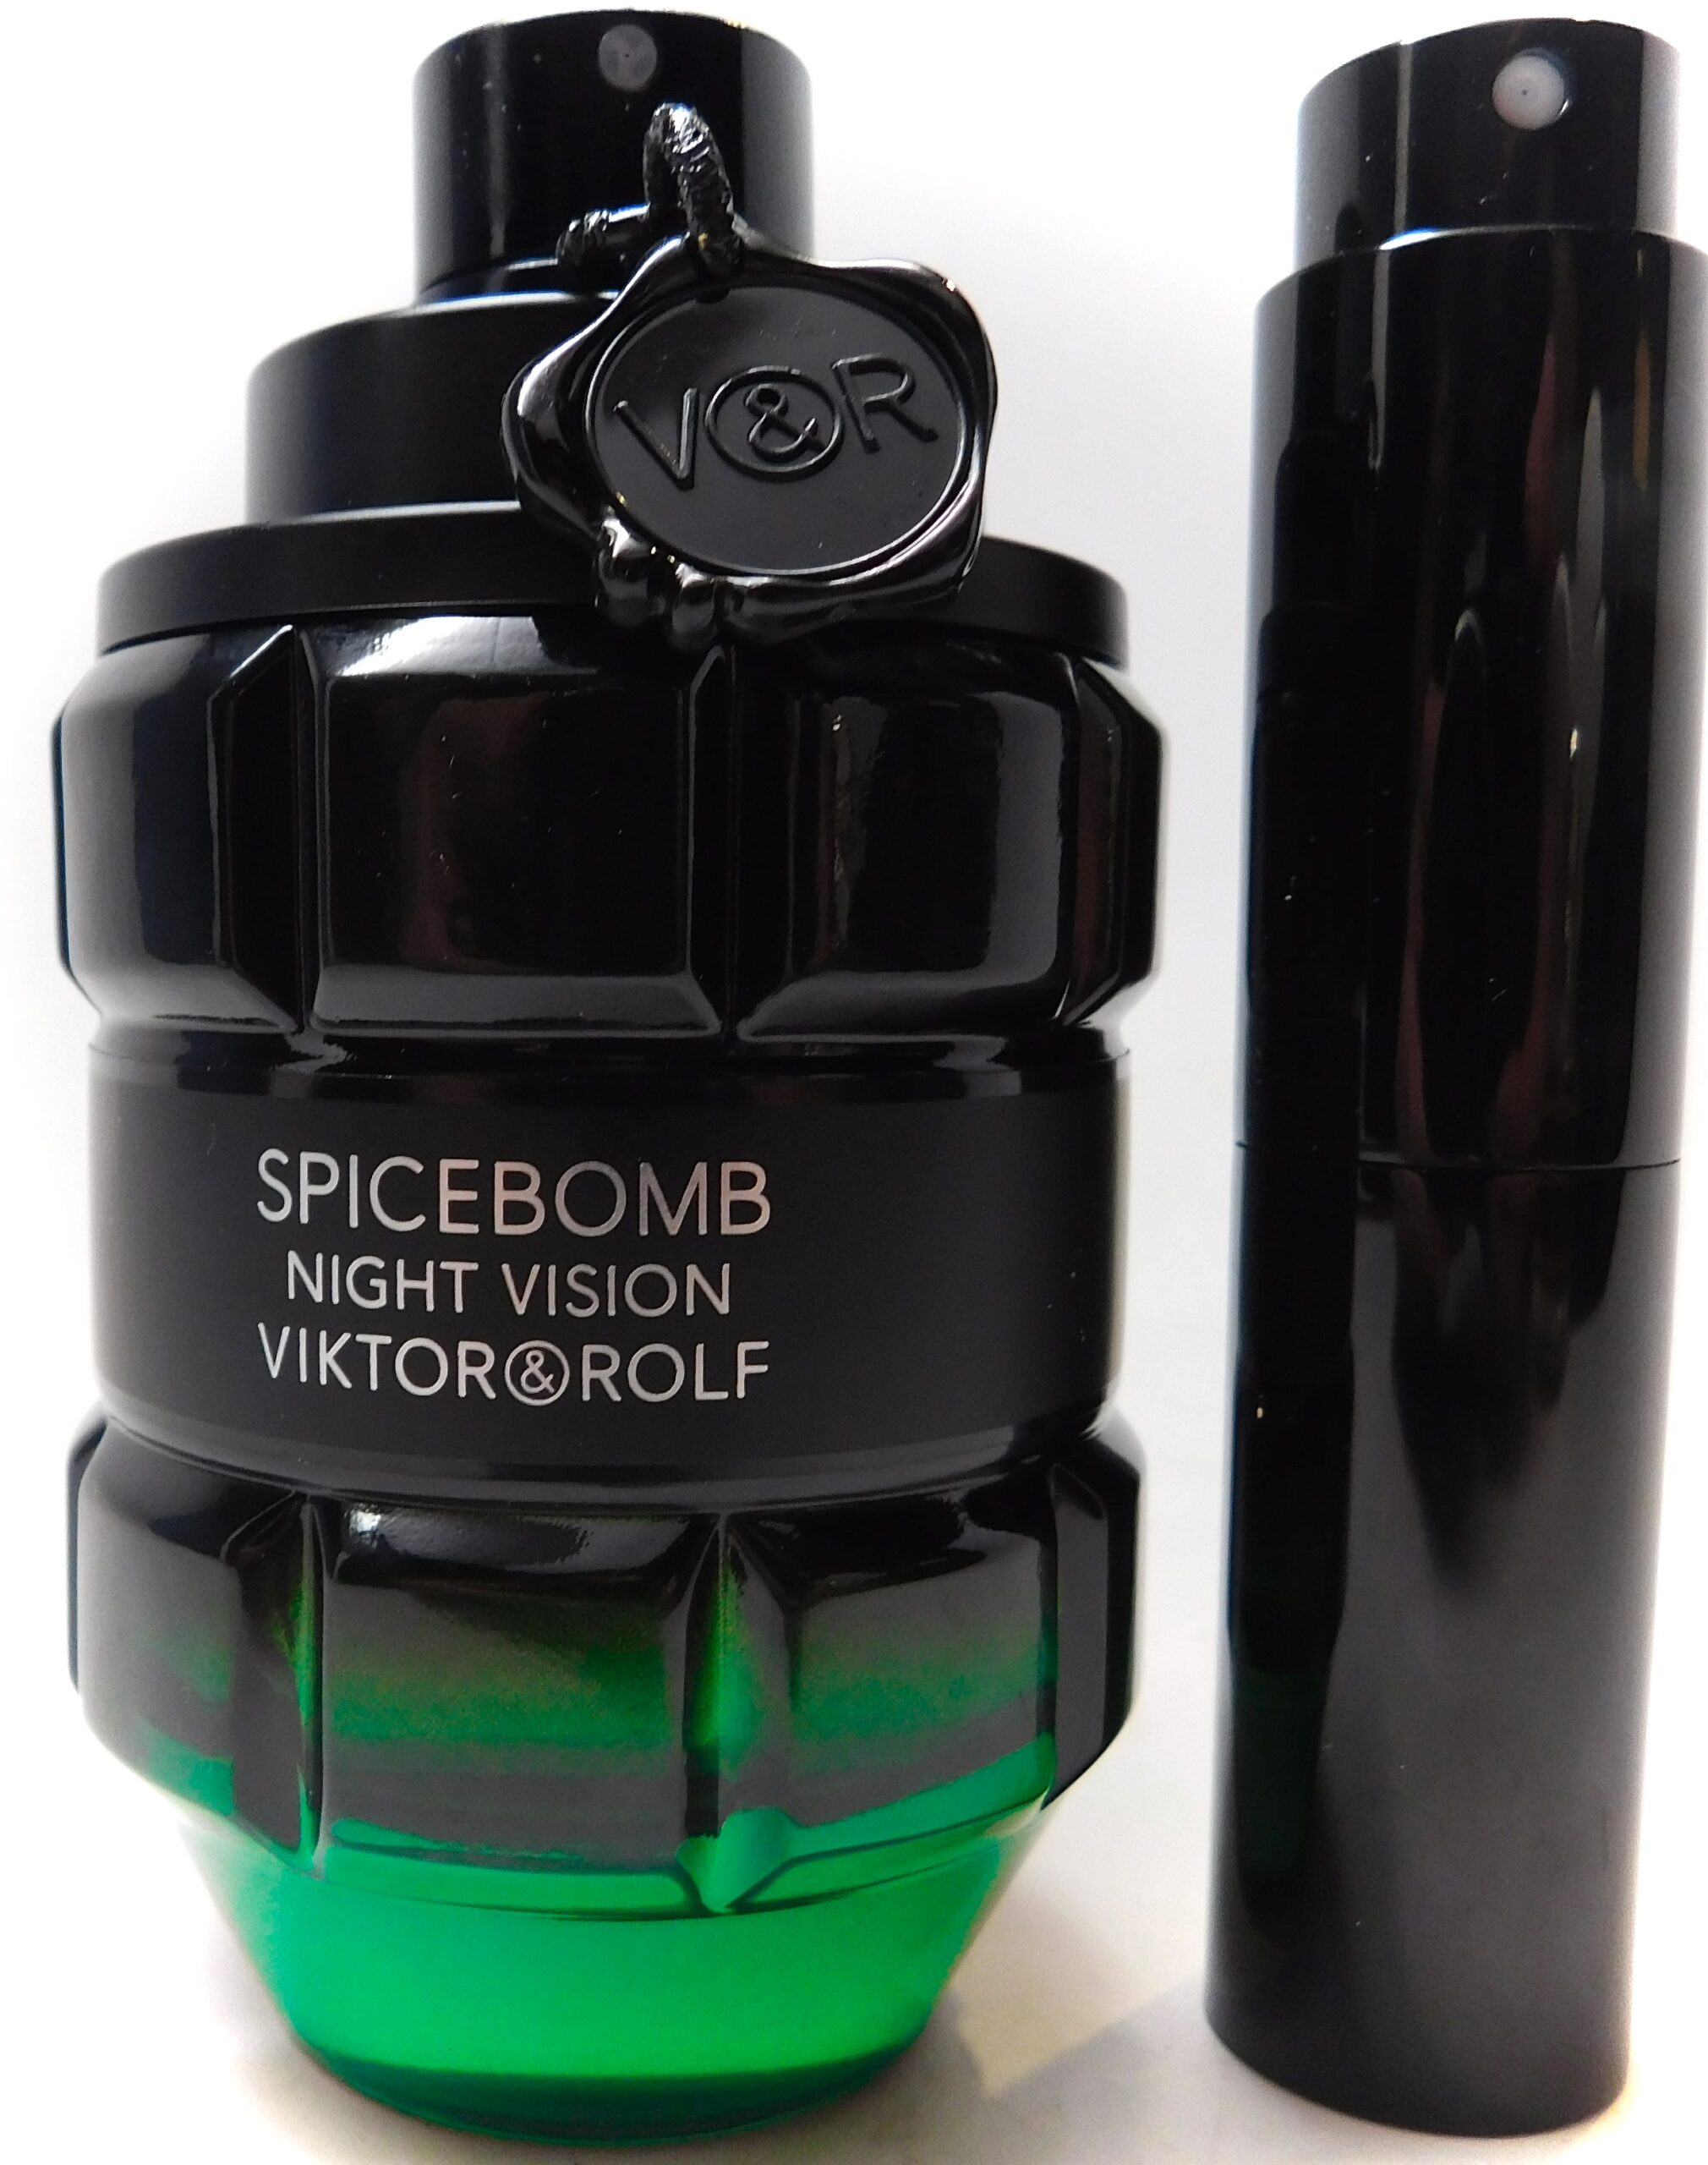 Viktor Rolf Spicebomb Night Vision 8ml Travel Atomizer Cologne Sample Rare Best Brands Perfume